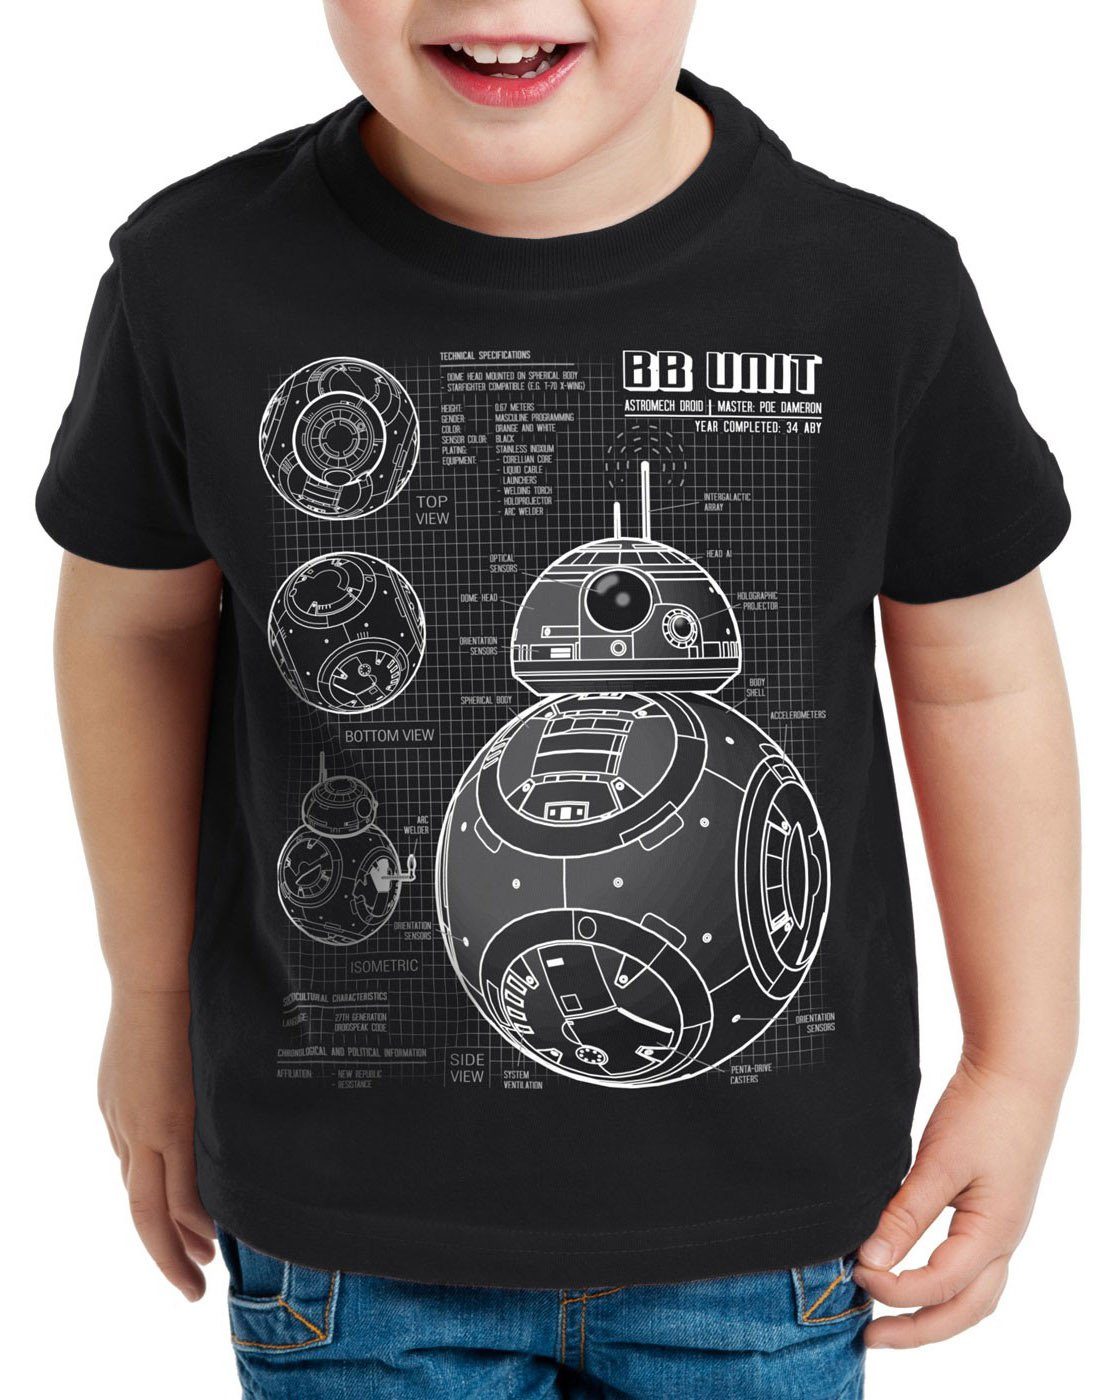 style3 Print-Shirt Kinder T-Shirt BB Unit blaupause astromech droide schwarz | T-Shirts